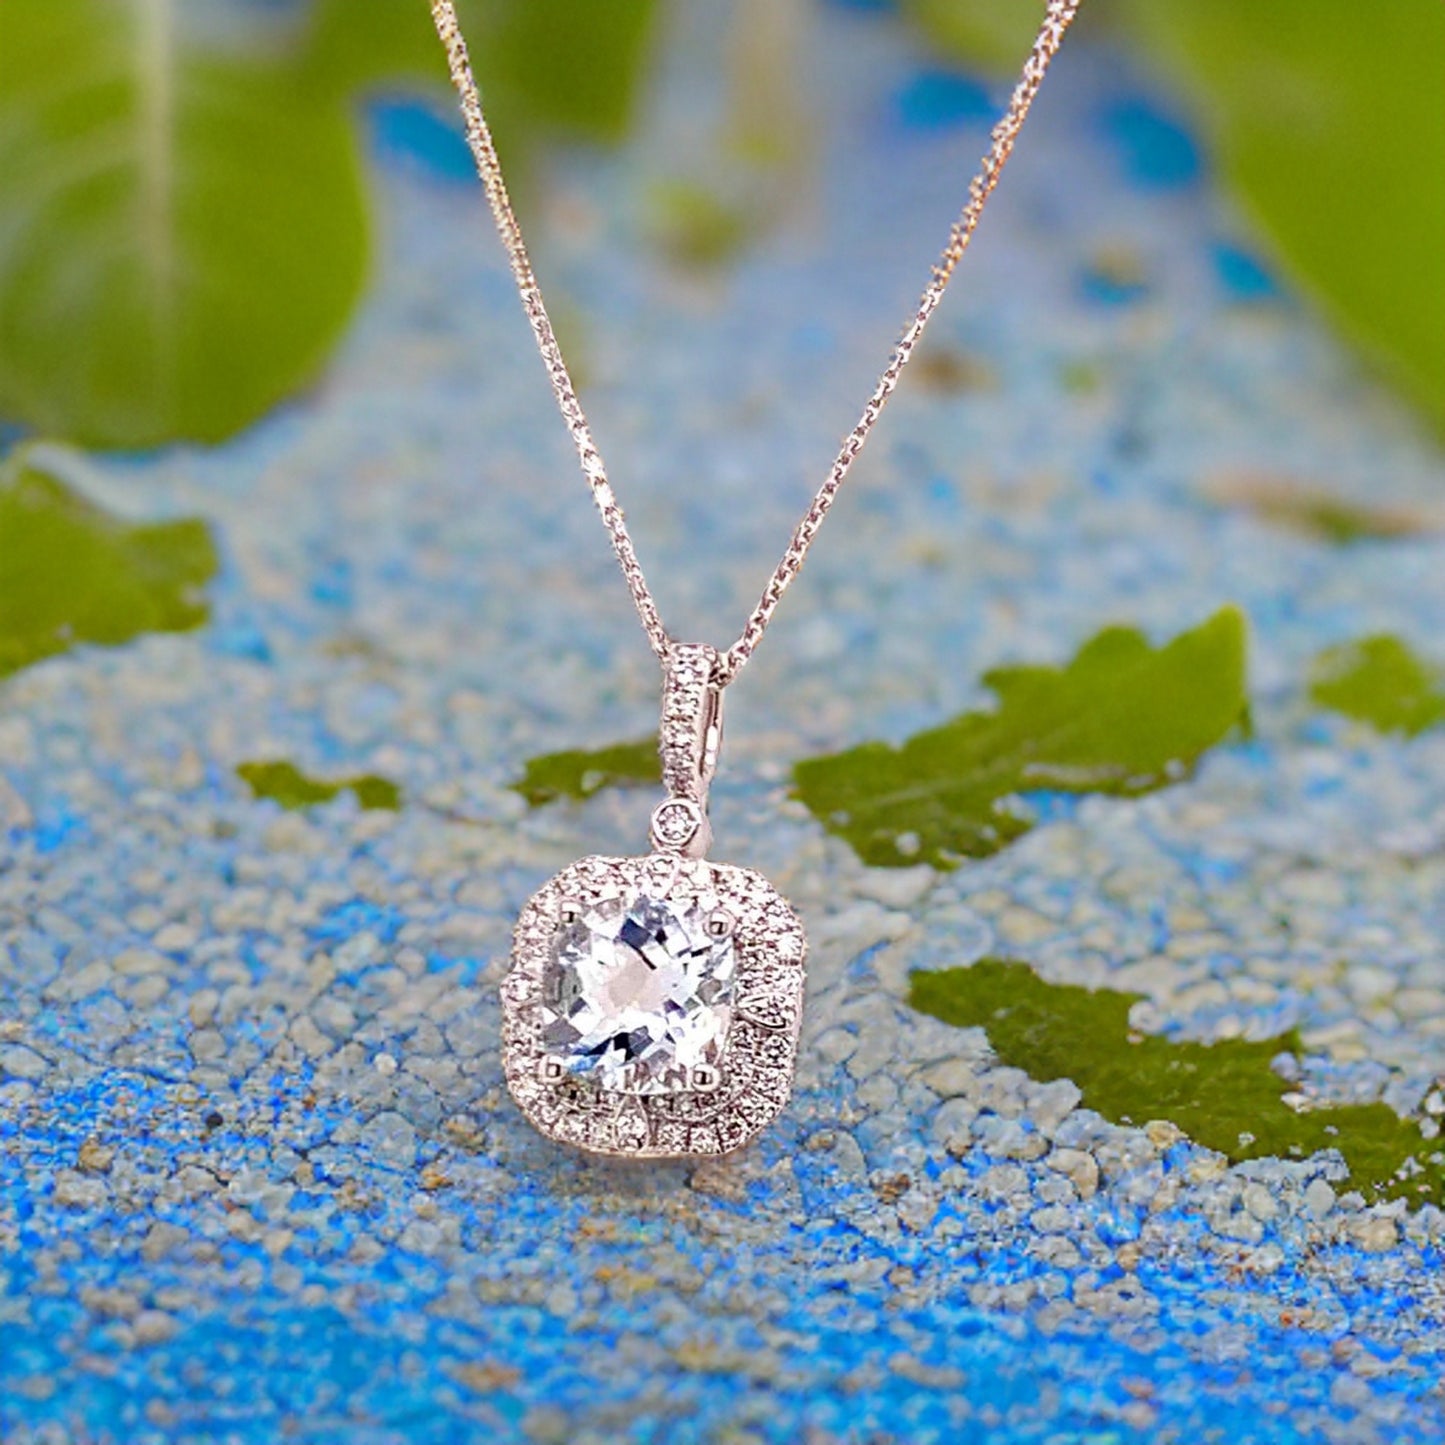 Diamond Aquamarine Necklace 18k Gold 18" 2.24 TCW Certified $3,950 920940